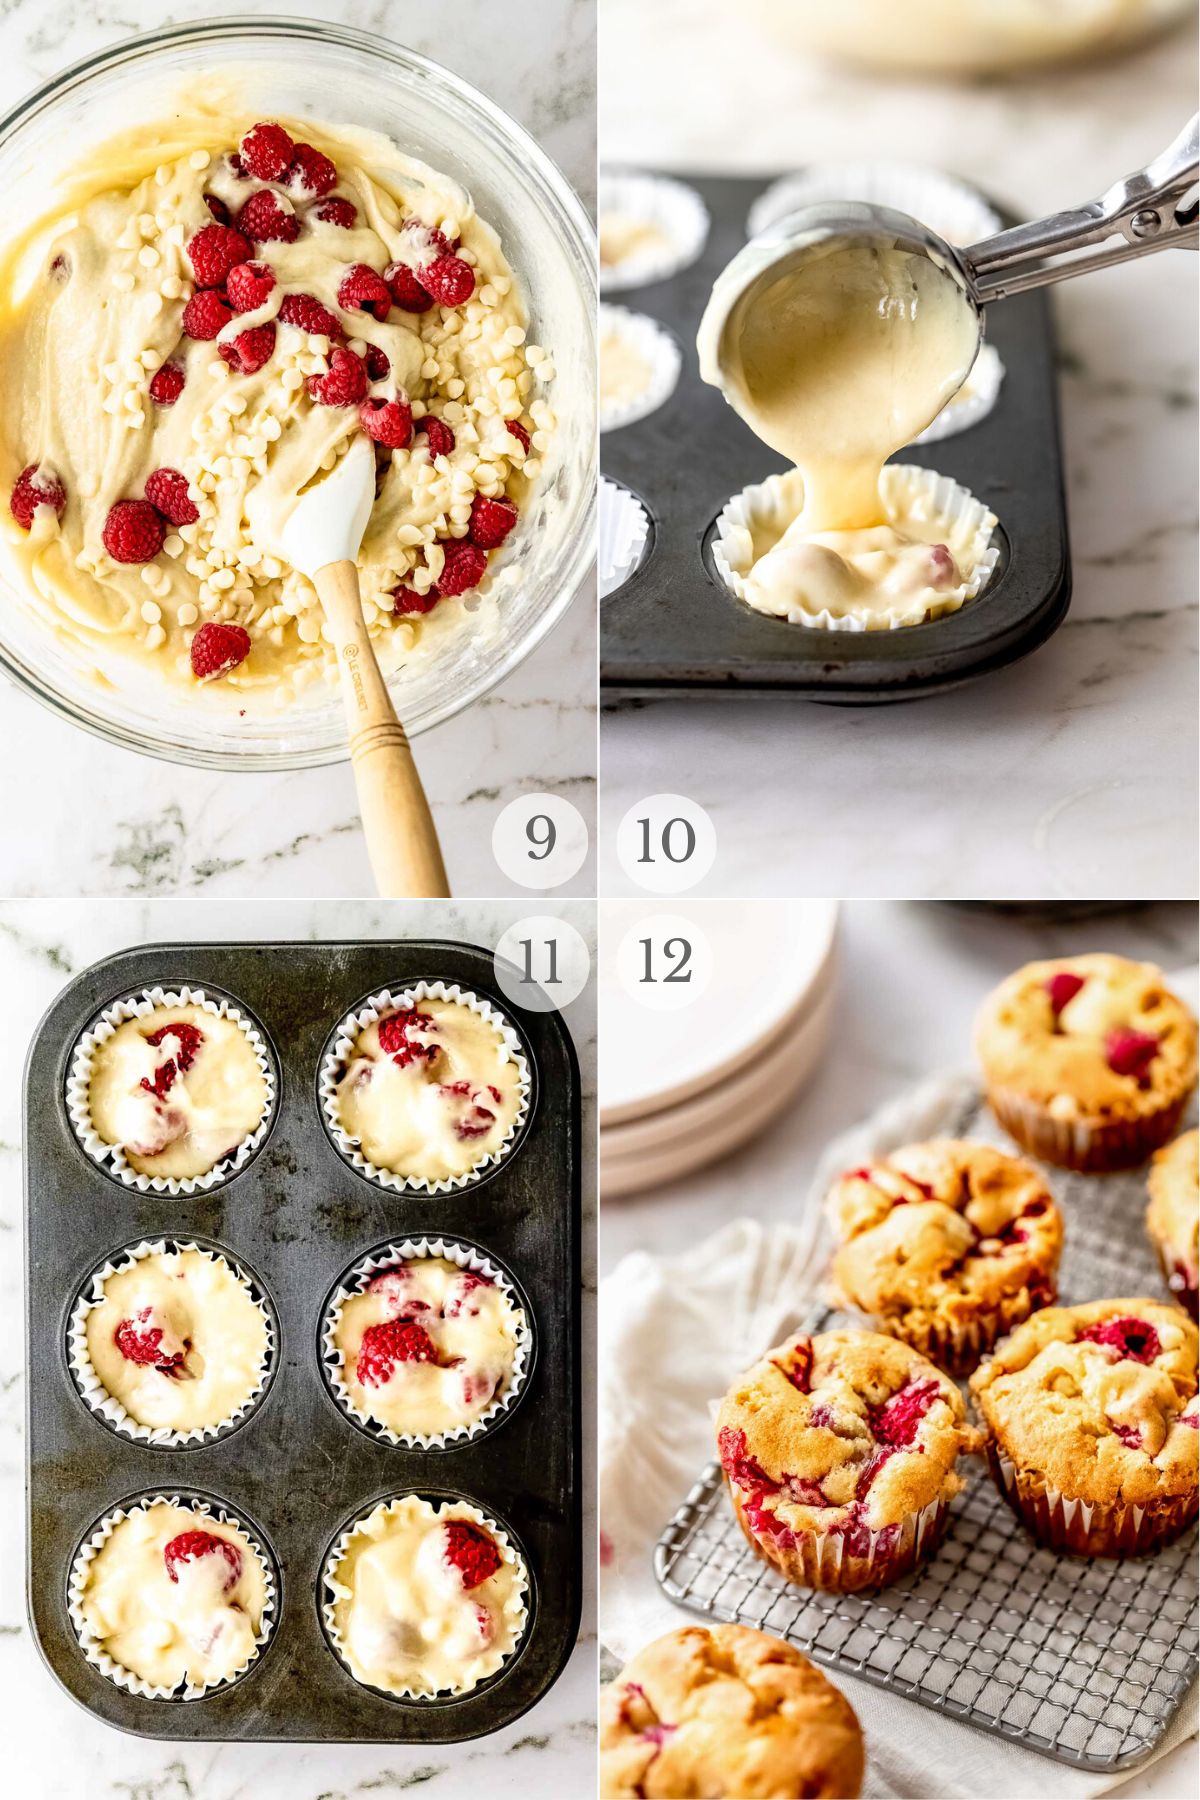 white chocolate raspberry muffins recipe steps 9-12.